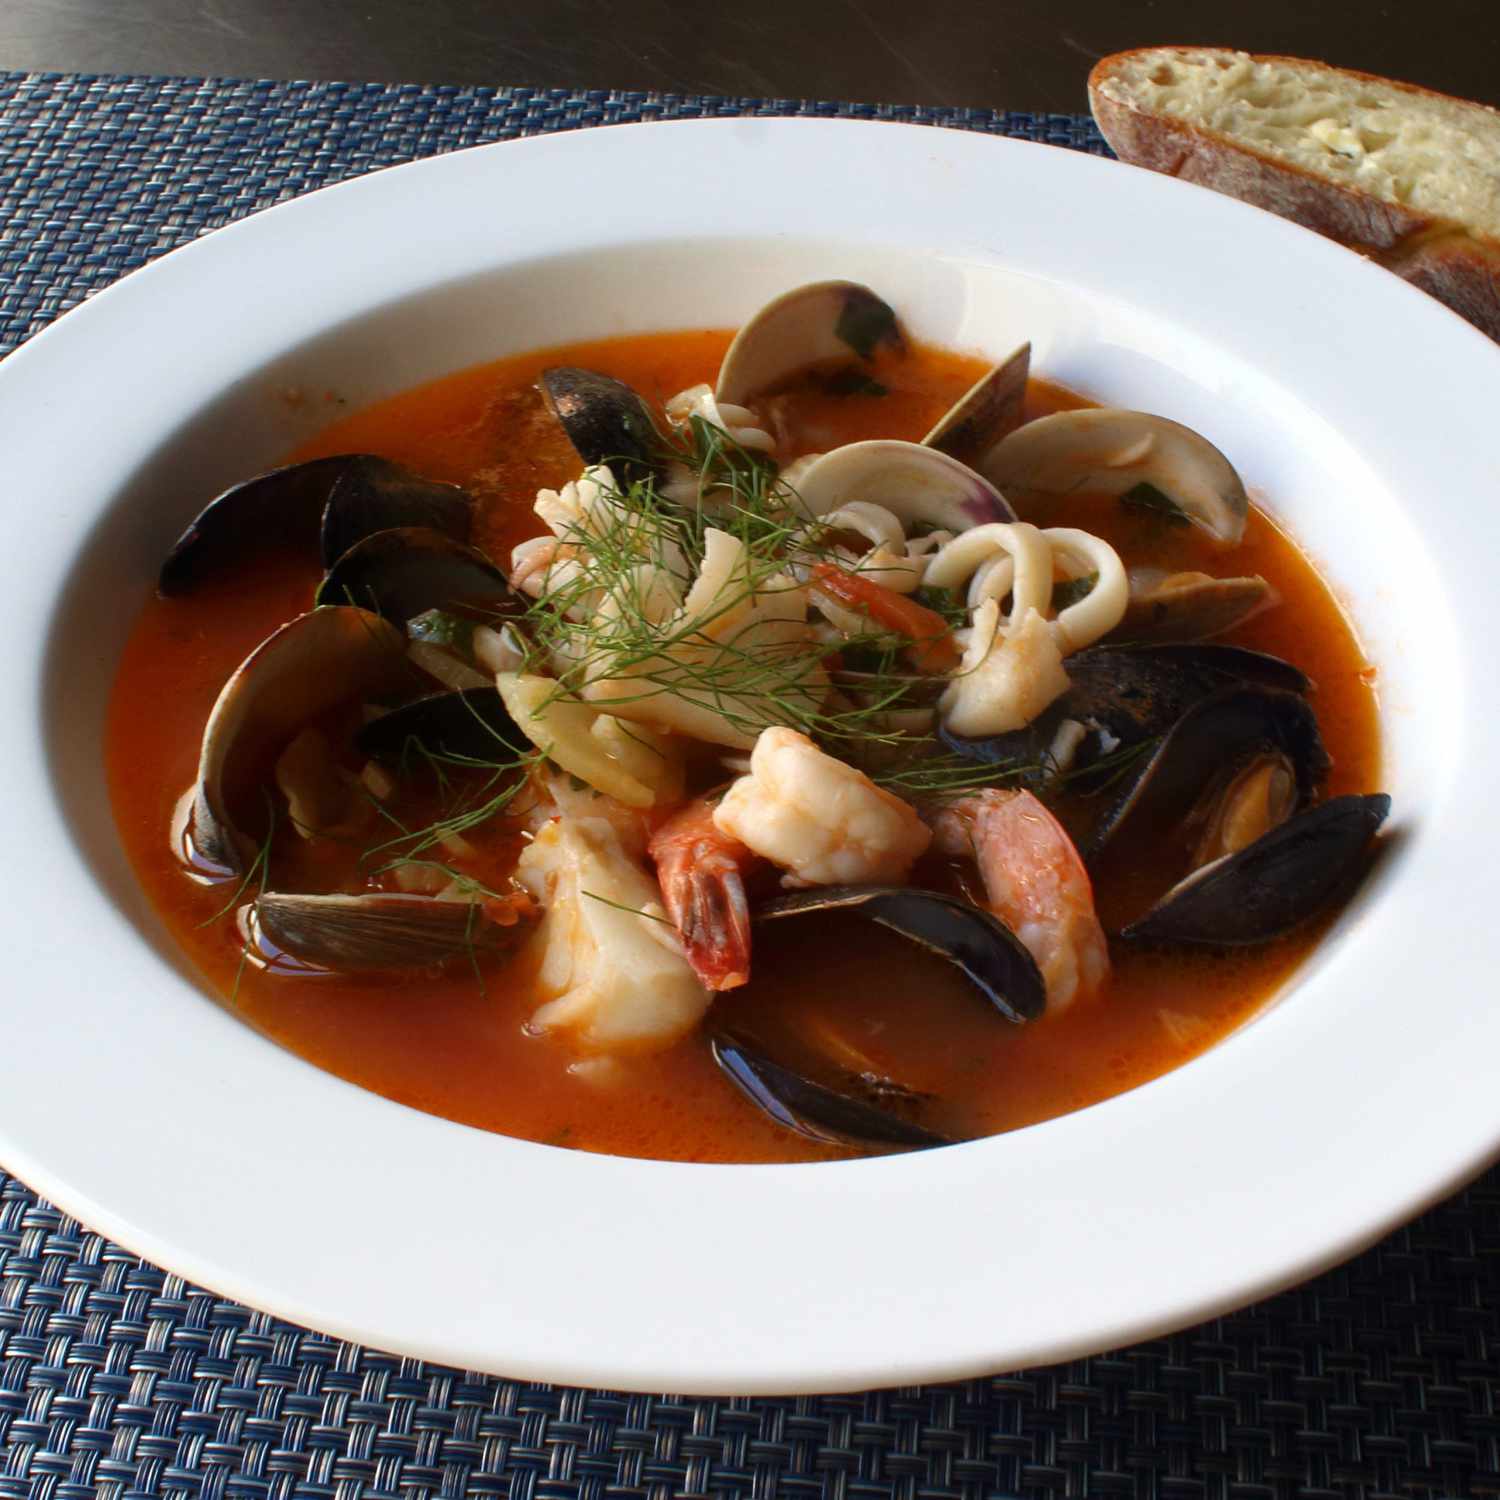 tomato based stew with clams, shrimp, calamari, fish